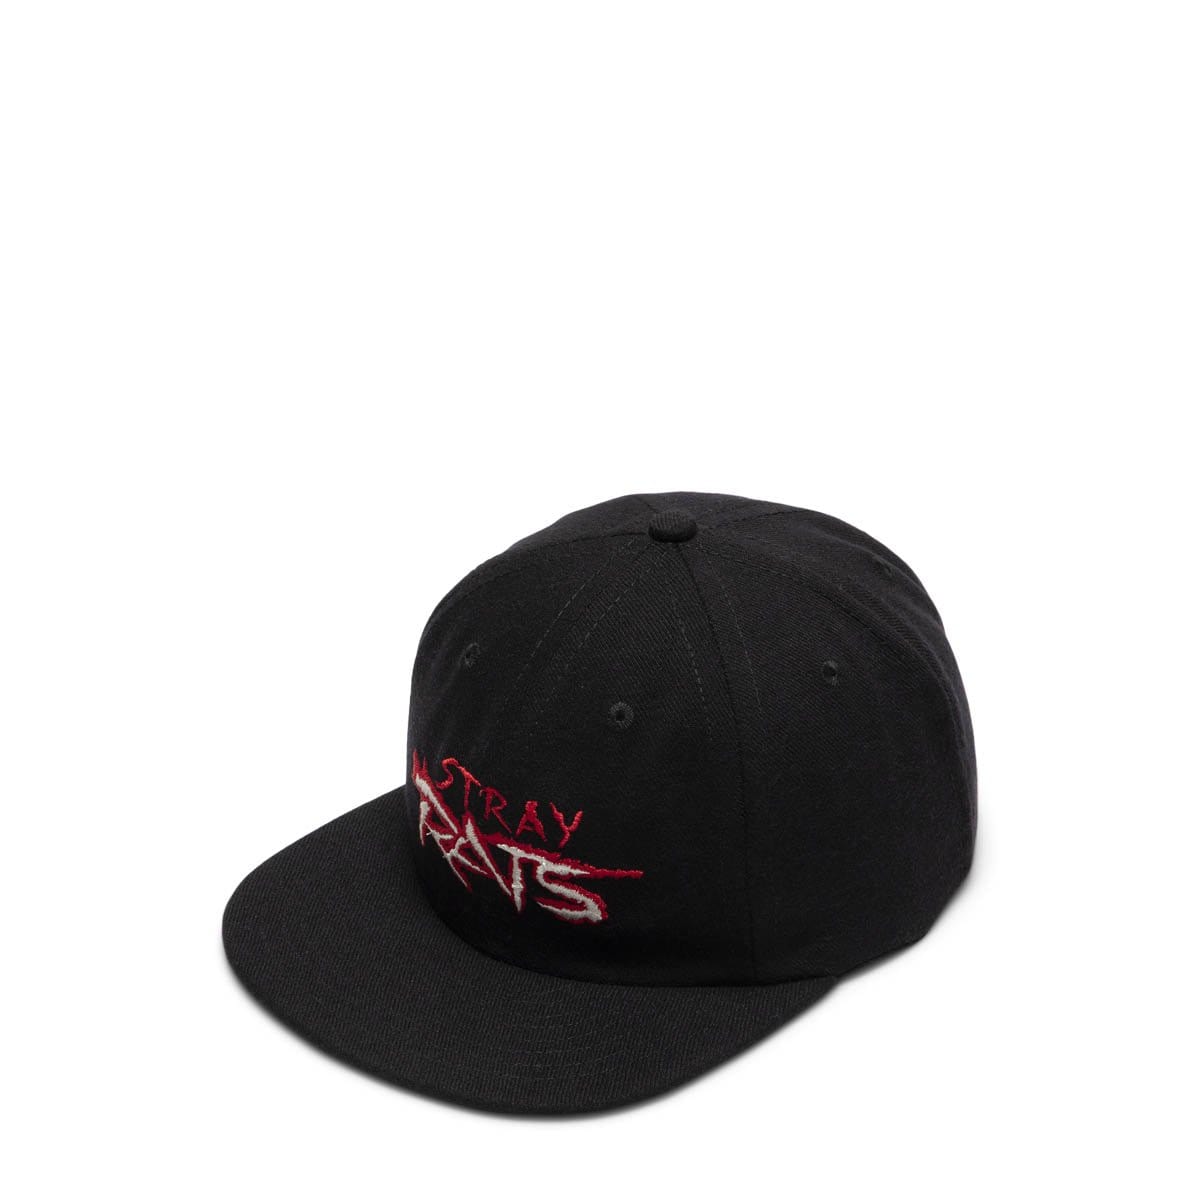 Stray Rats Headwear BLACK / O/S PRIMAL RAGE HAT